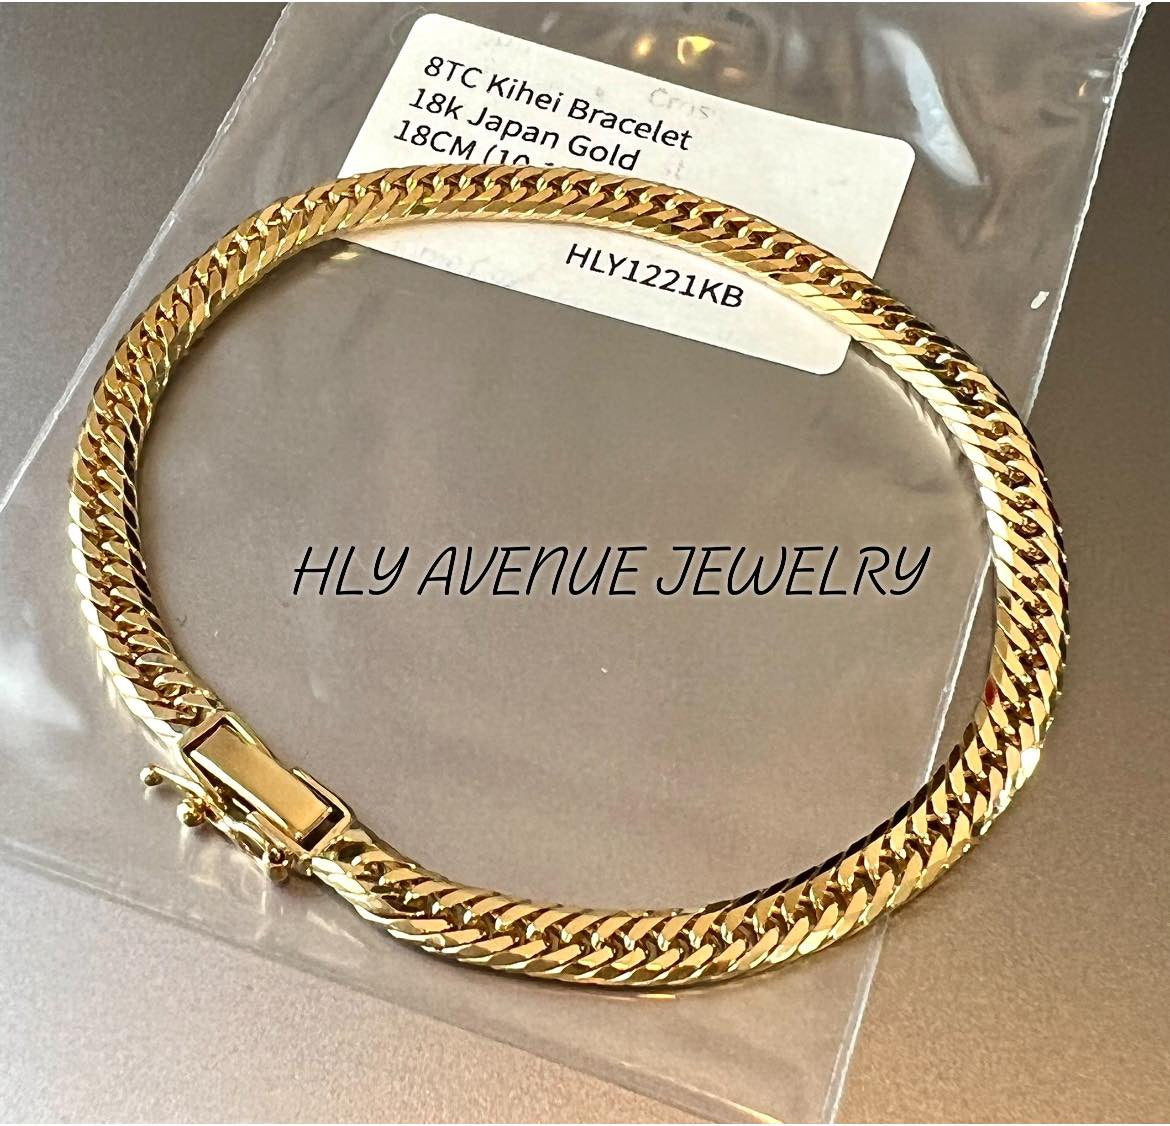 18K Japan Gold 8Cut Kihei Bracelet